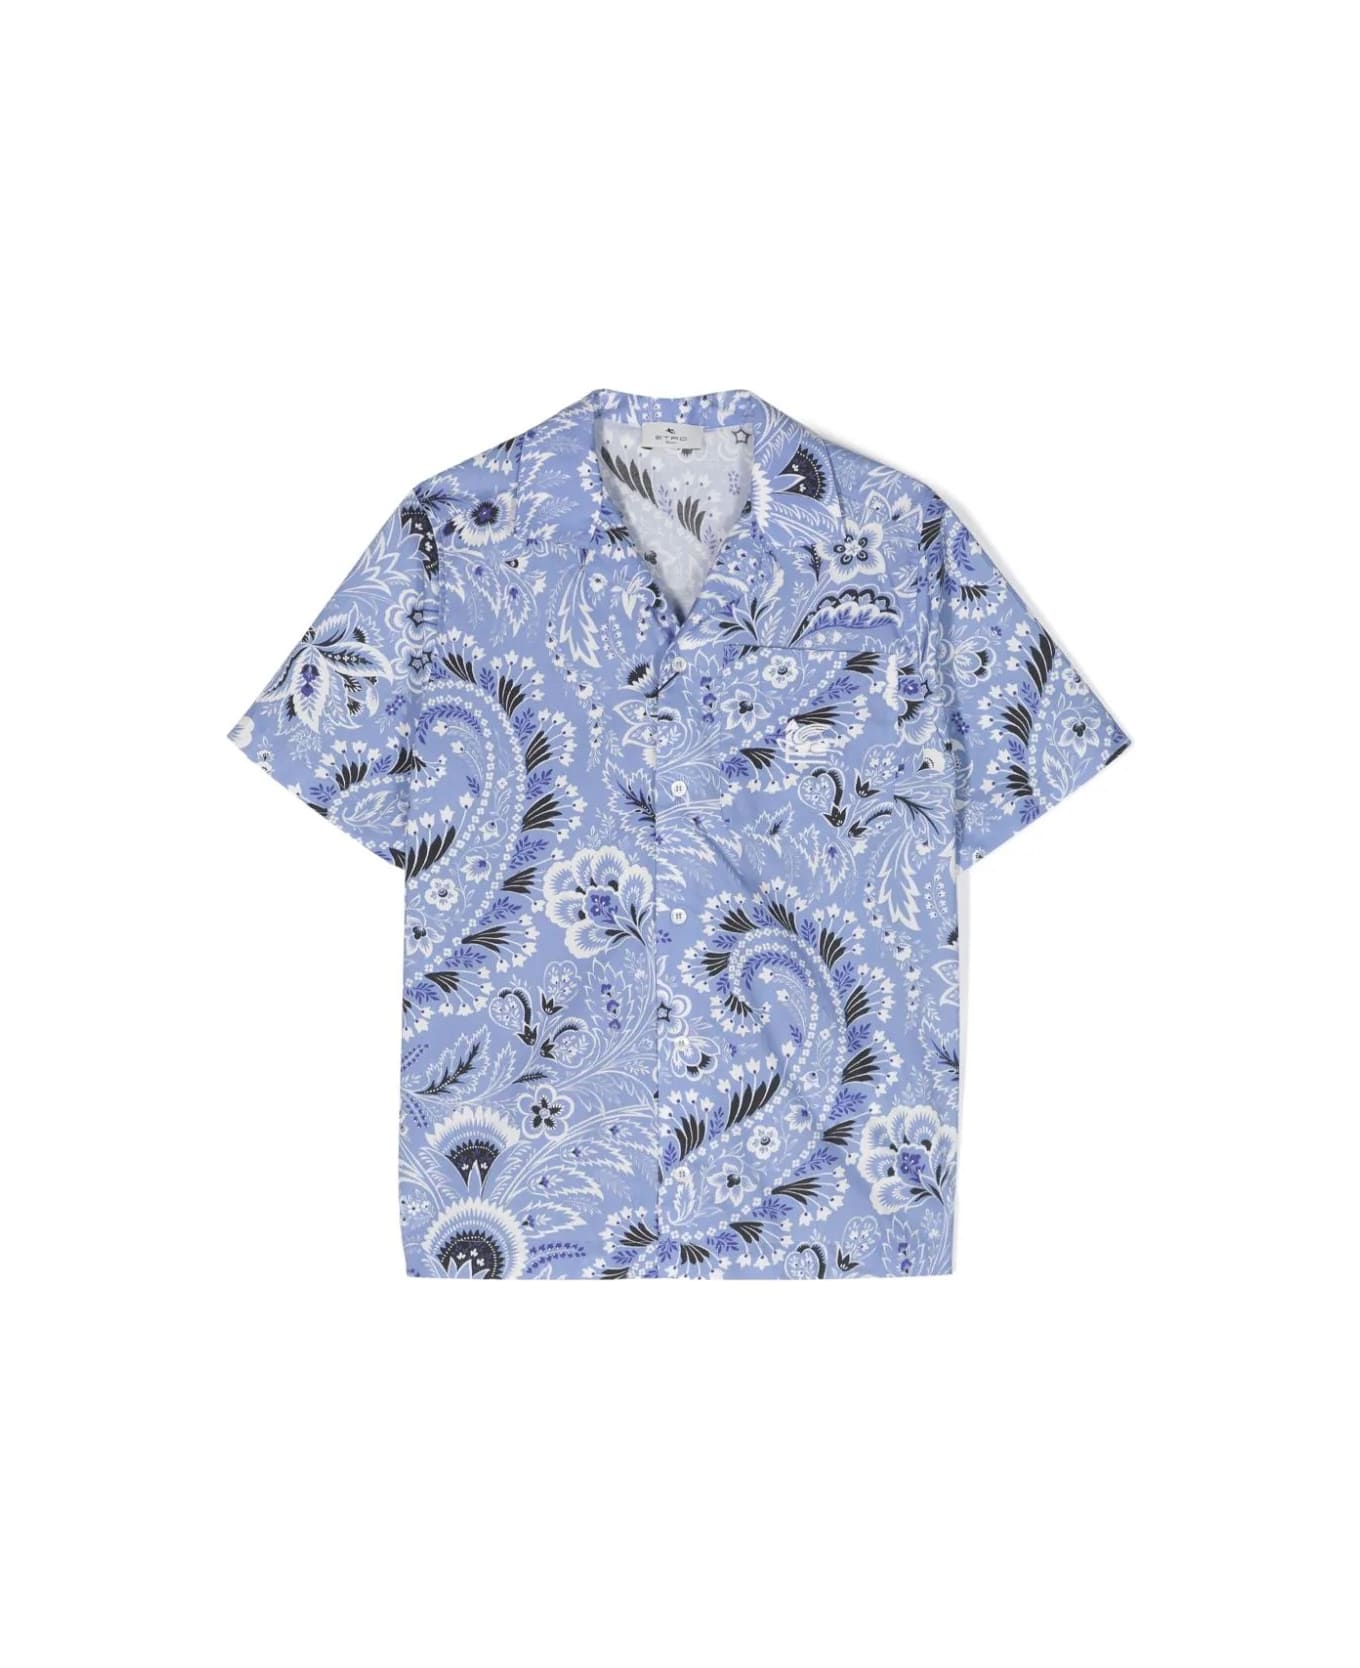 Etro Light Blue Bowling Shirt With Paisley Motif - Blue